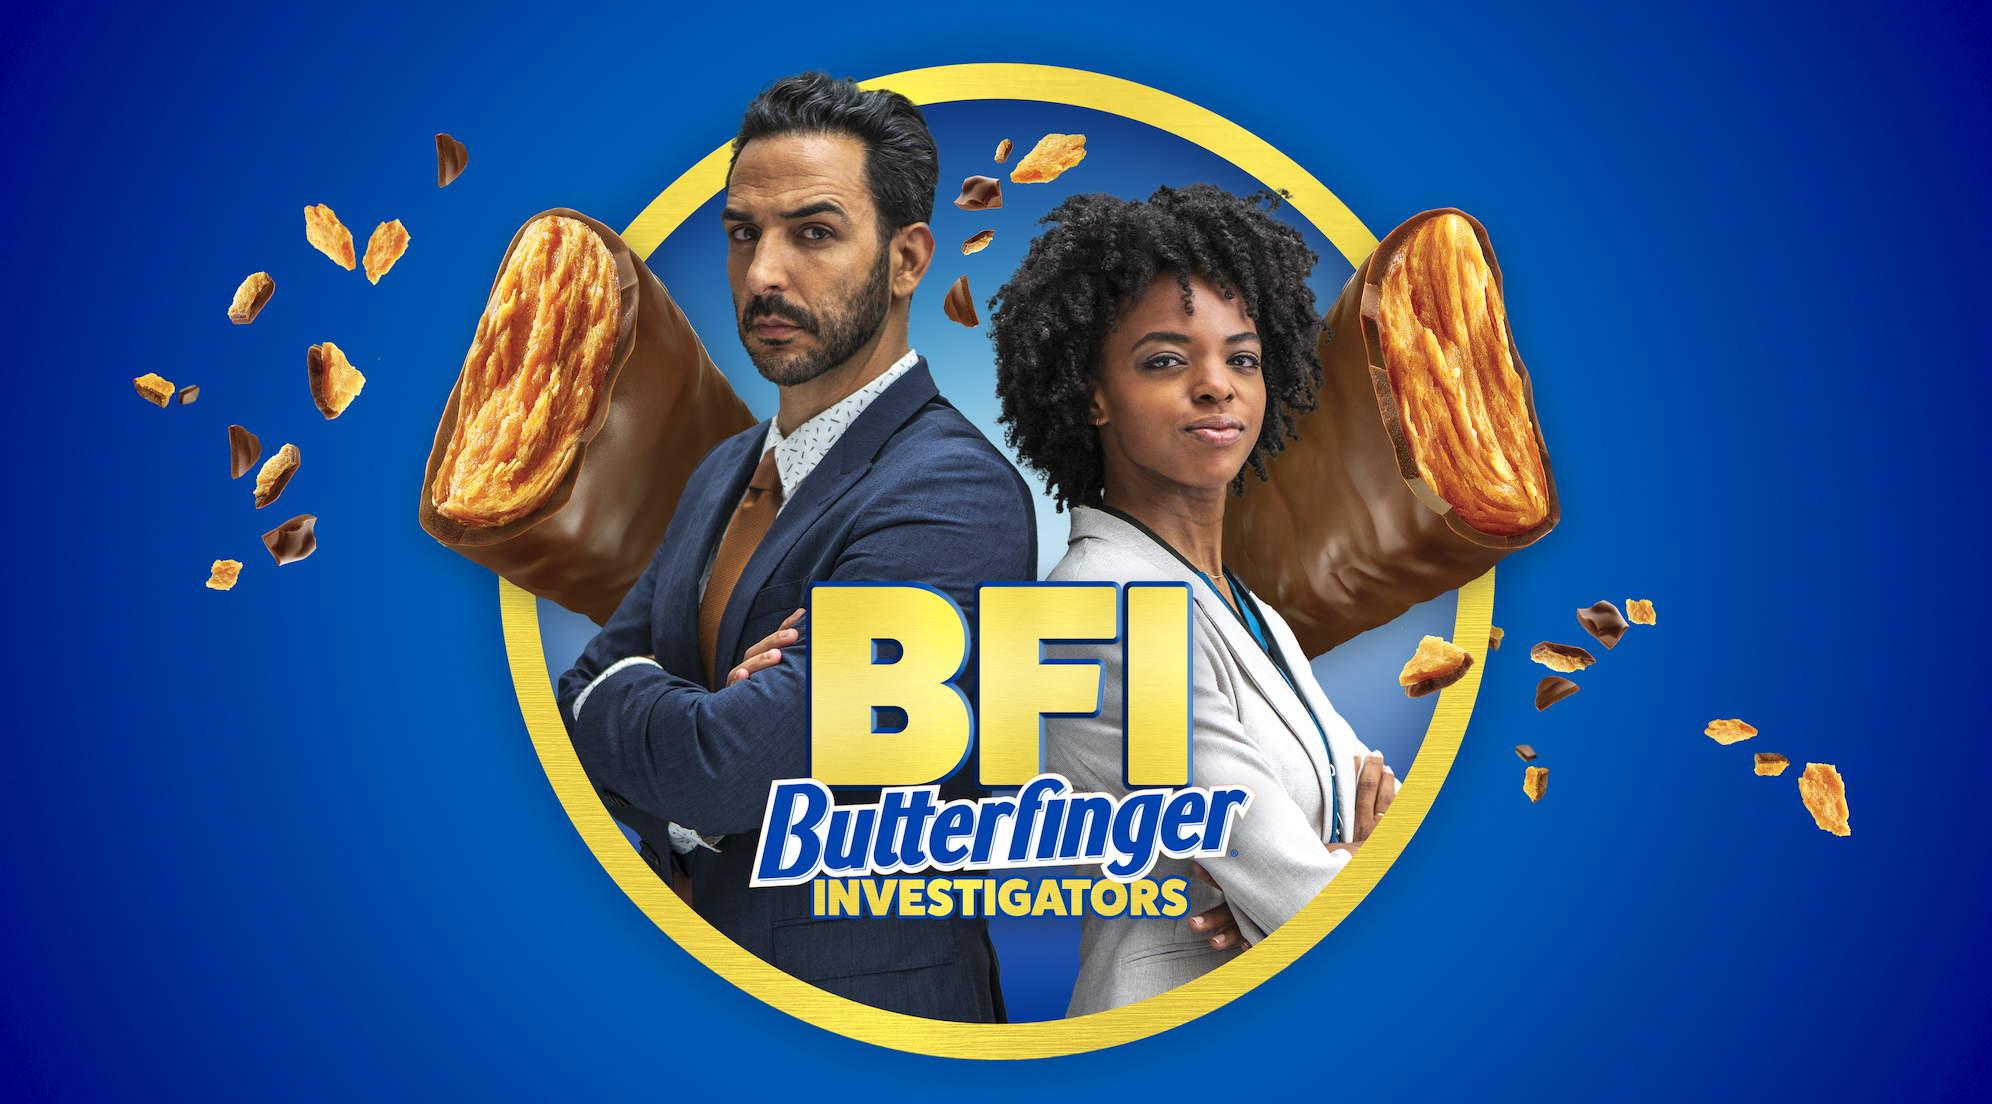 BFI -&nbsp;Butterfinger Investigators